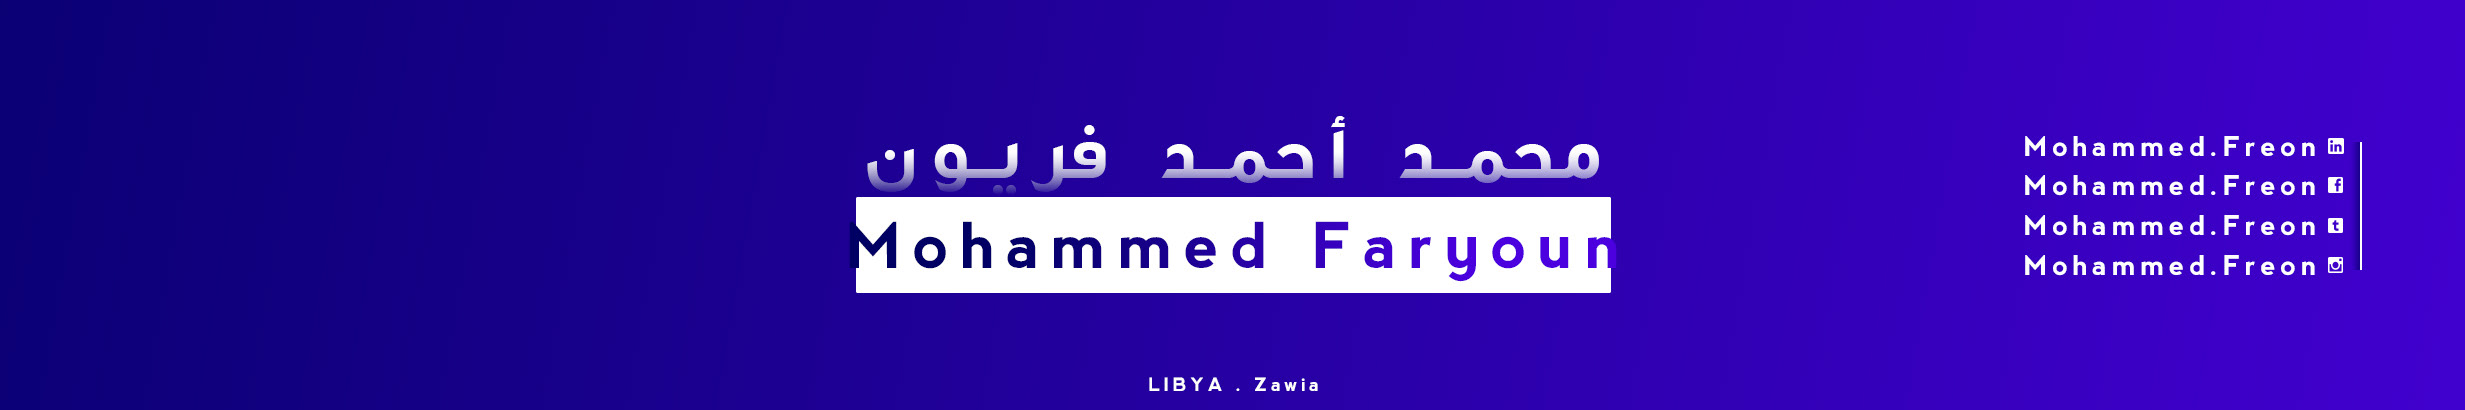 Mohammed Freon's profile banner